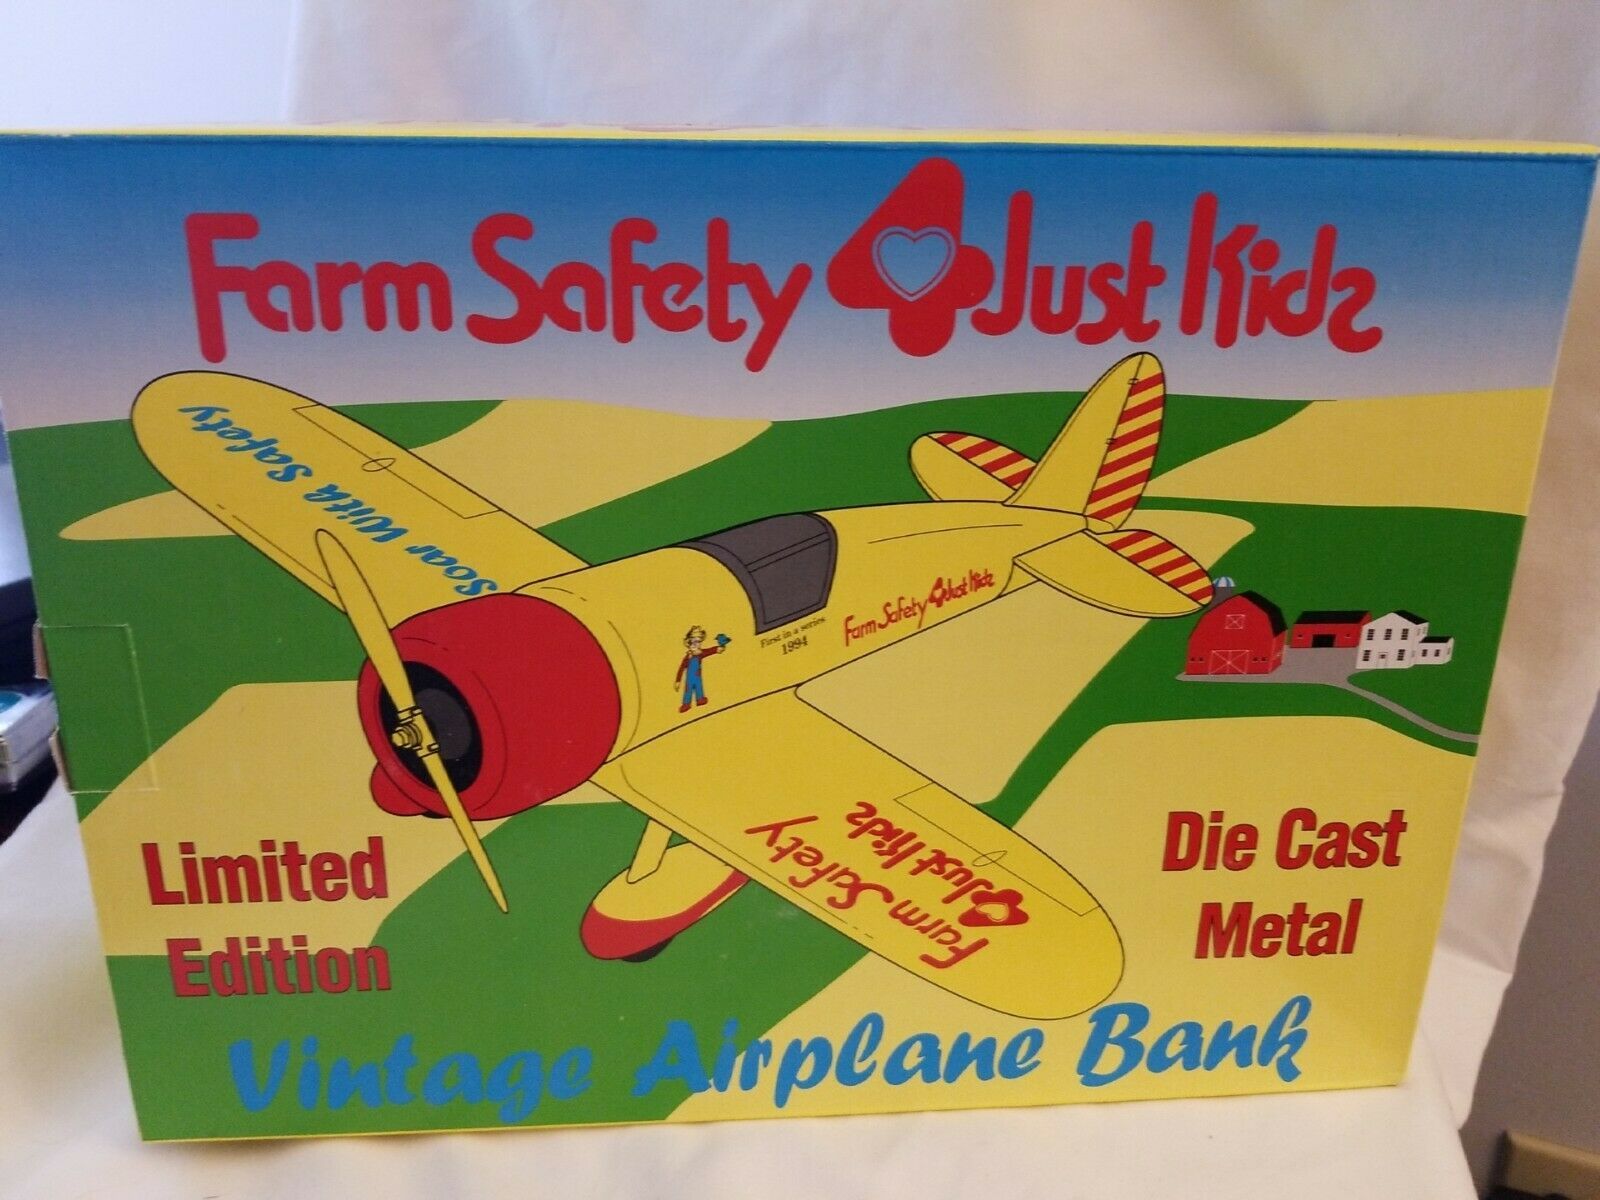 Spec Cast Vintage Airplane Bank "Farm Safety 4 Kids" Die-Cast - $9.85